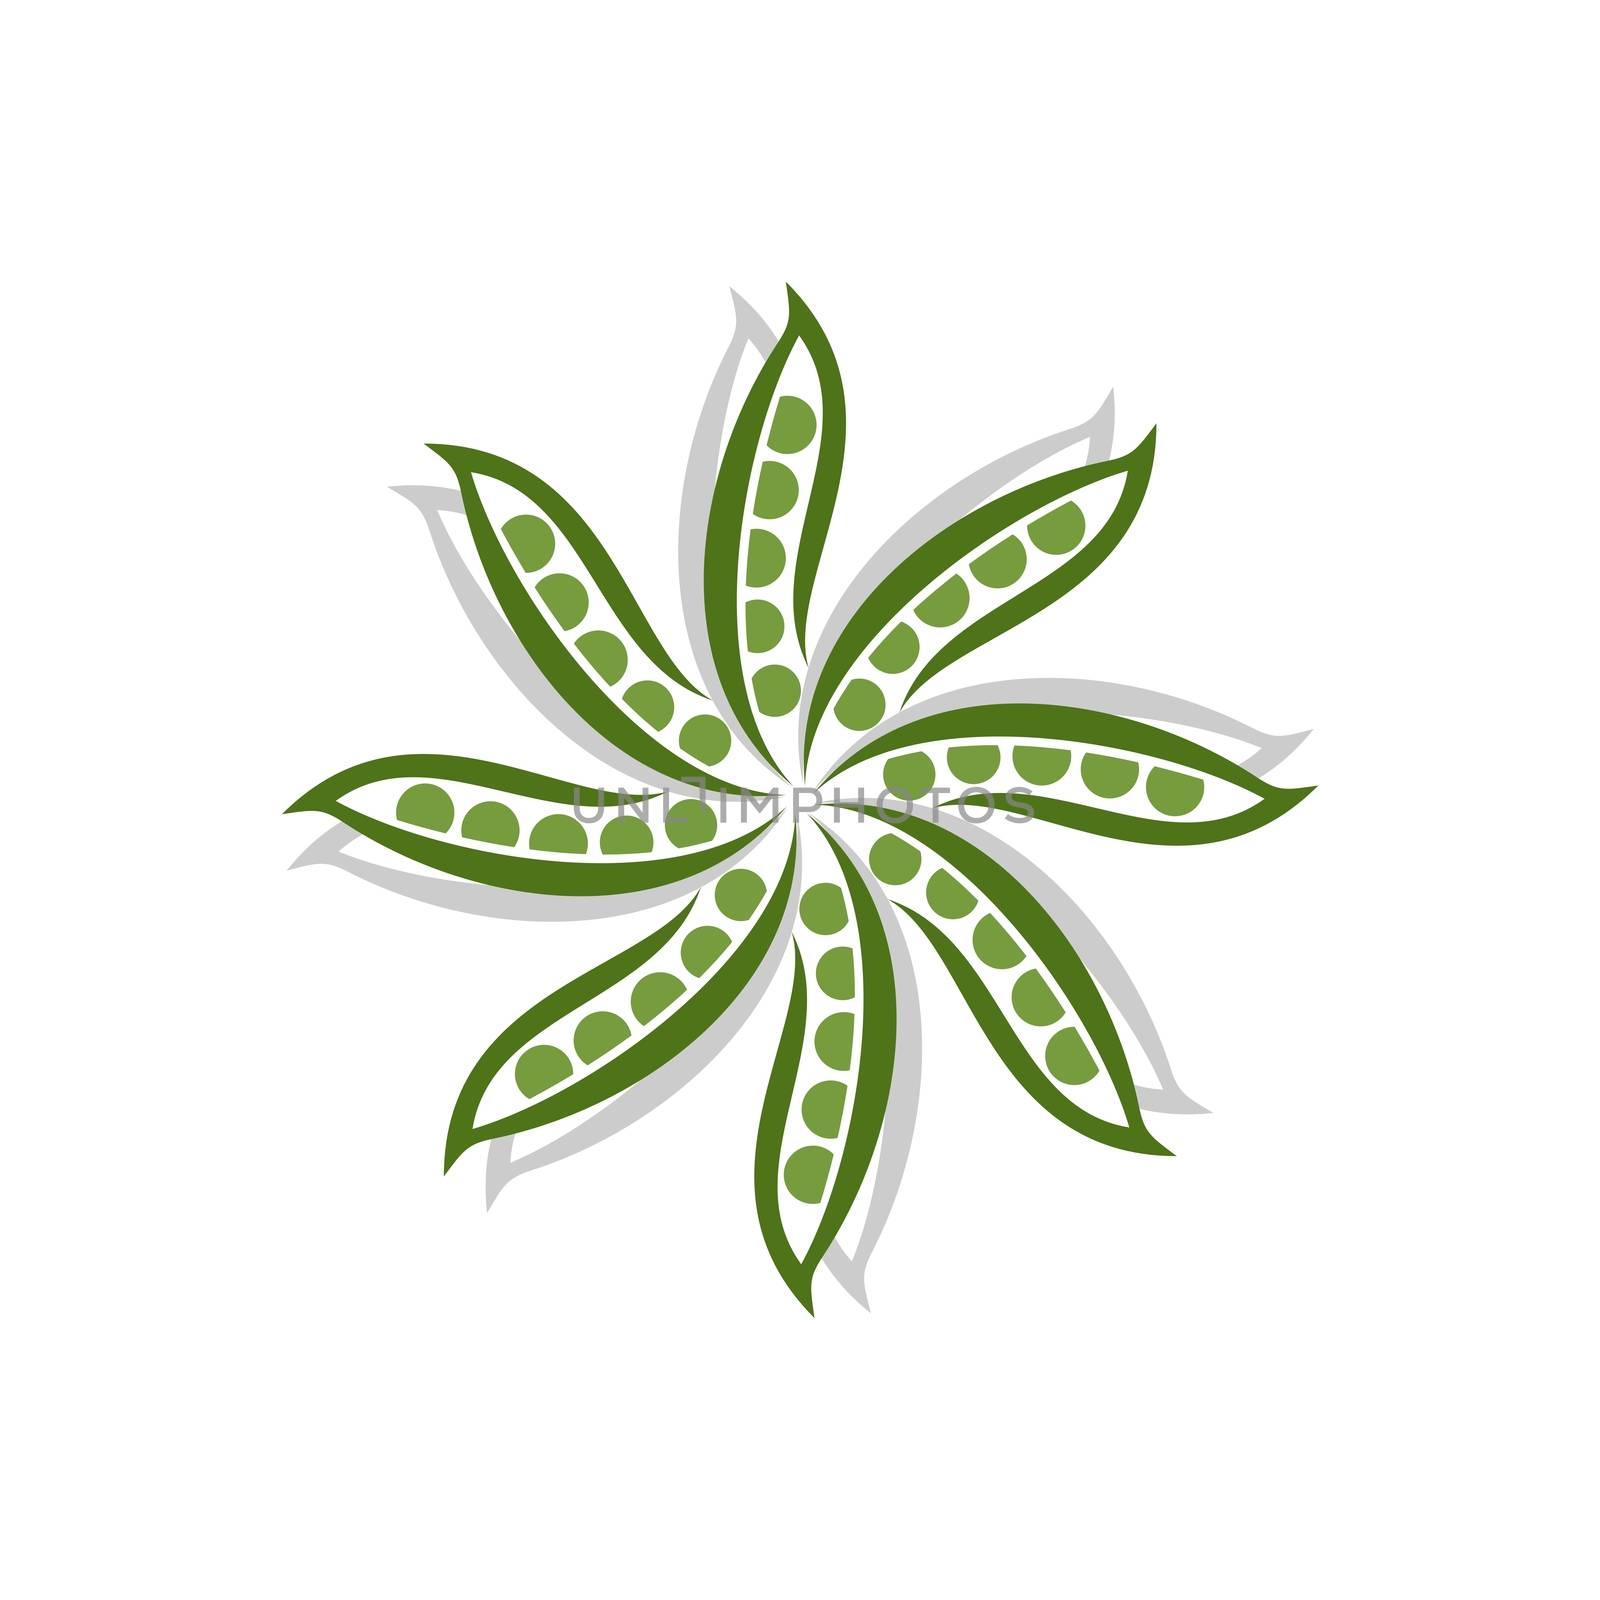 Green Pea Pod Star Logo Template Illustration Design. Vector EPS 10. by soponyono1